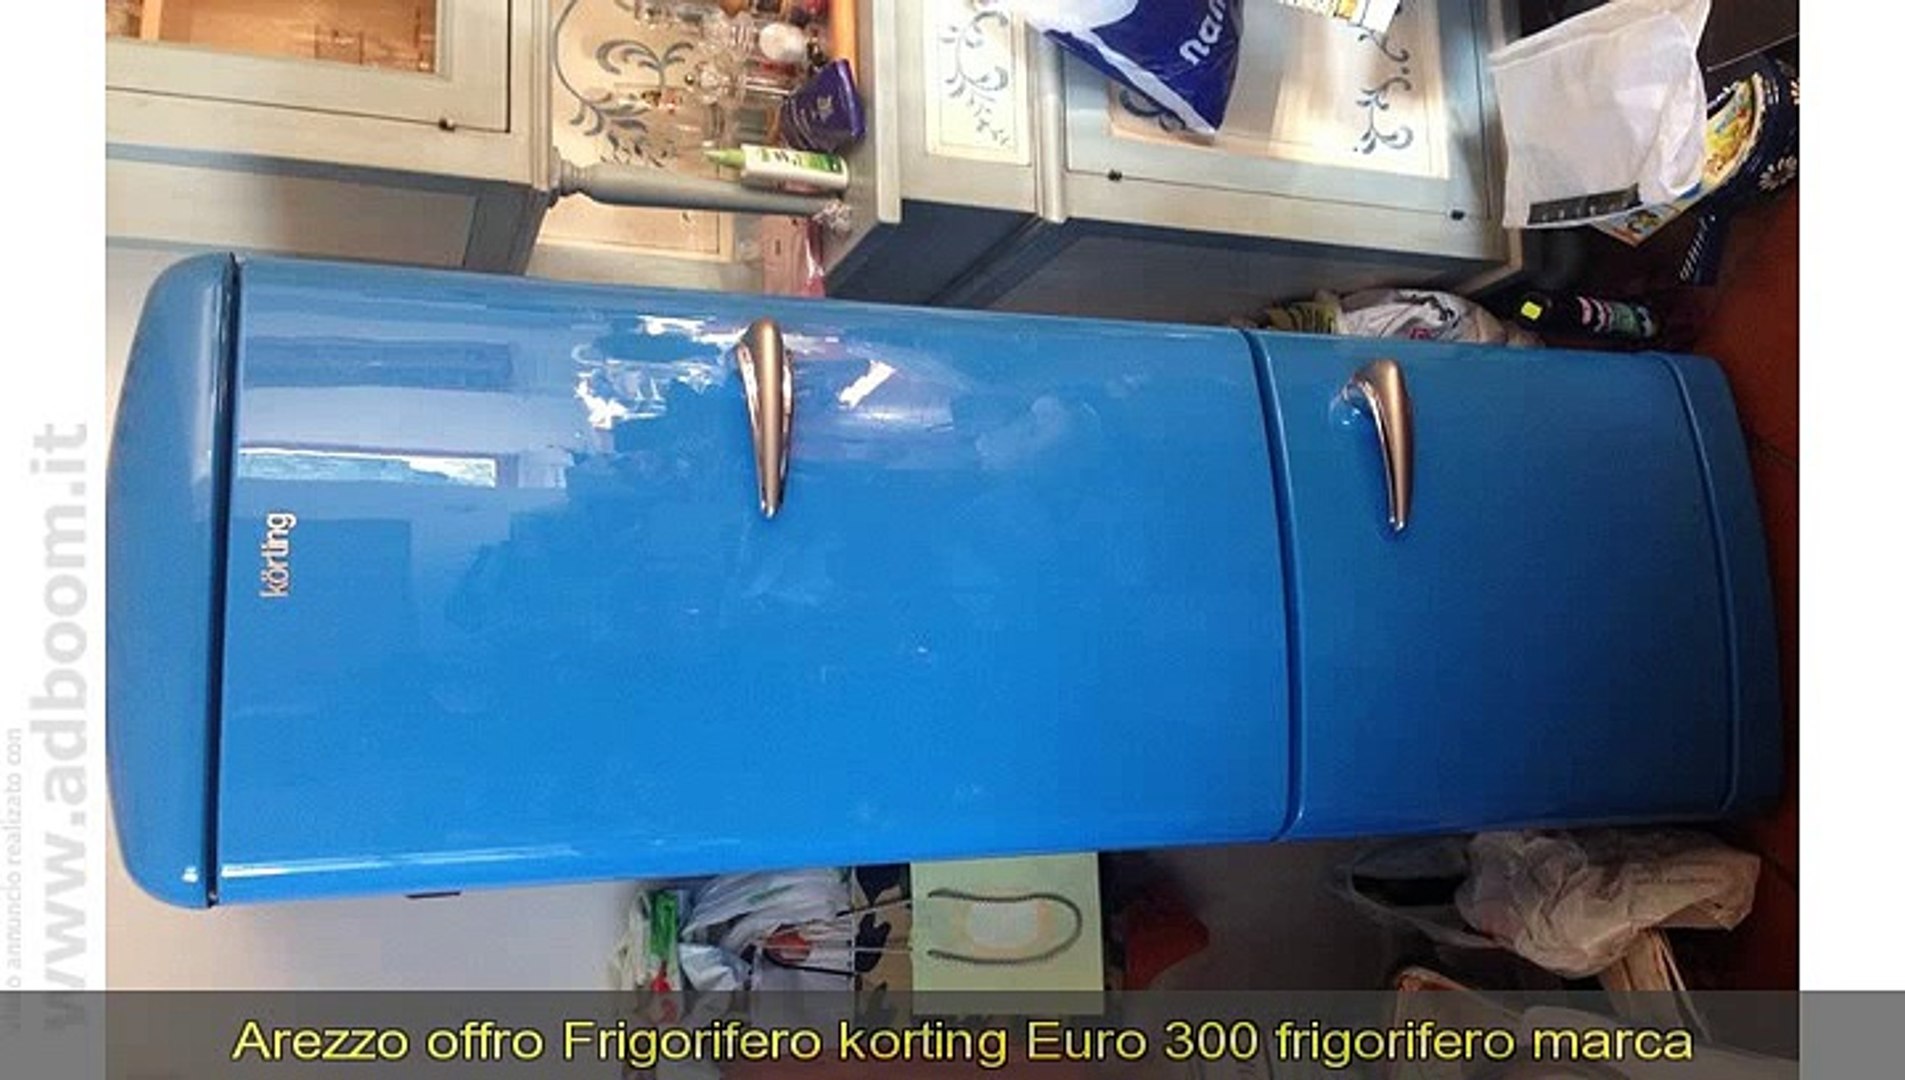 AREZZO, FRIGORIFERO KORTING EURO 300 - Video Dailymotion